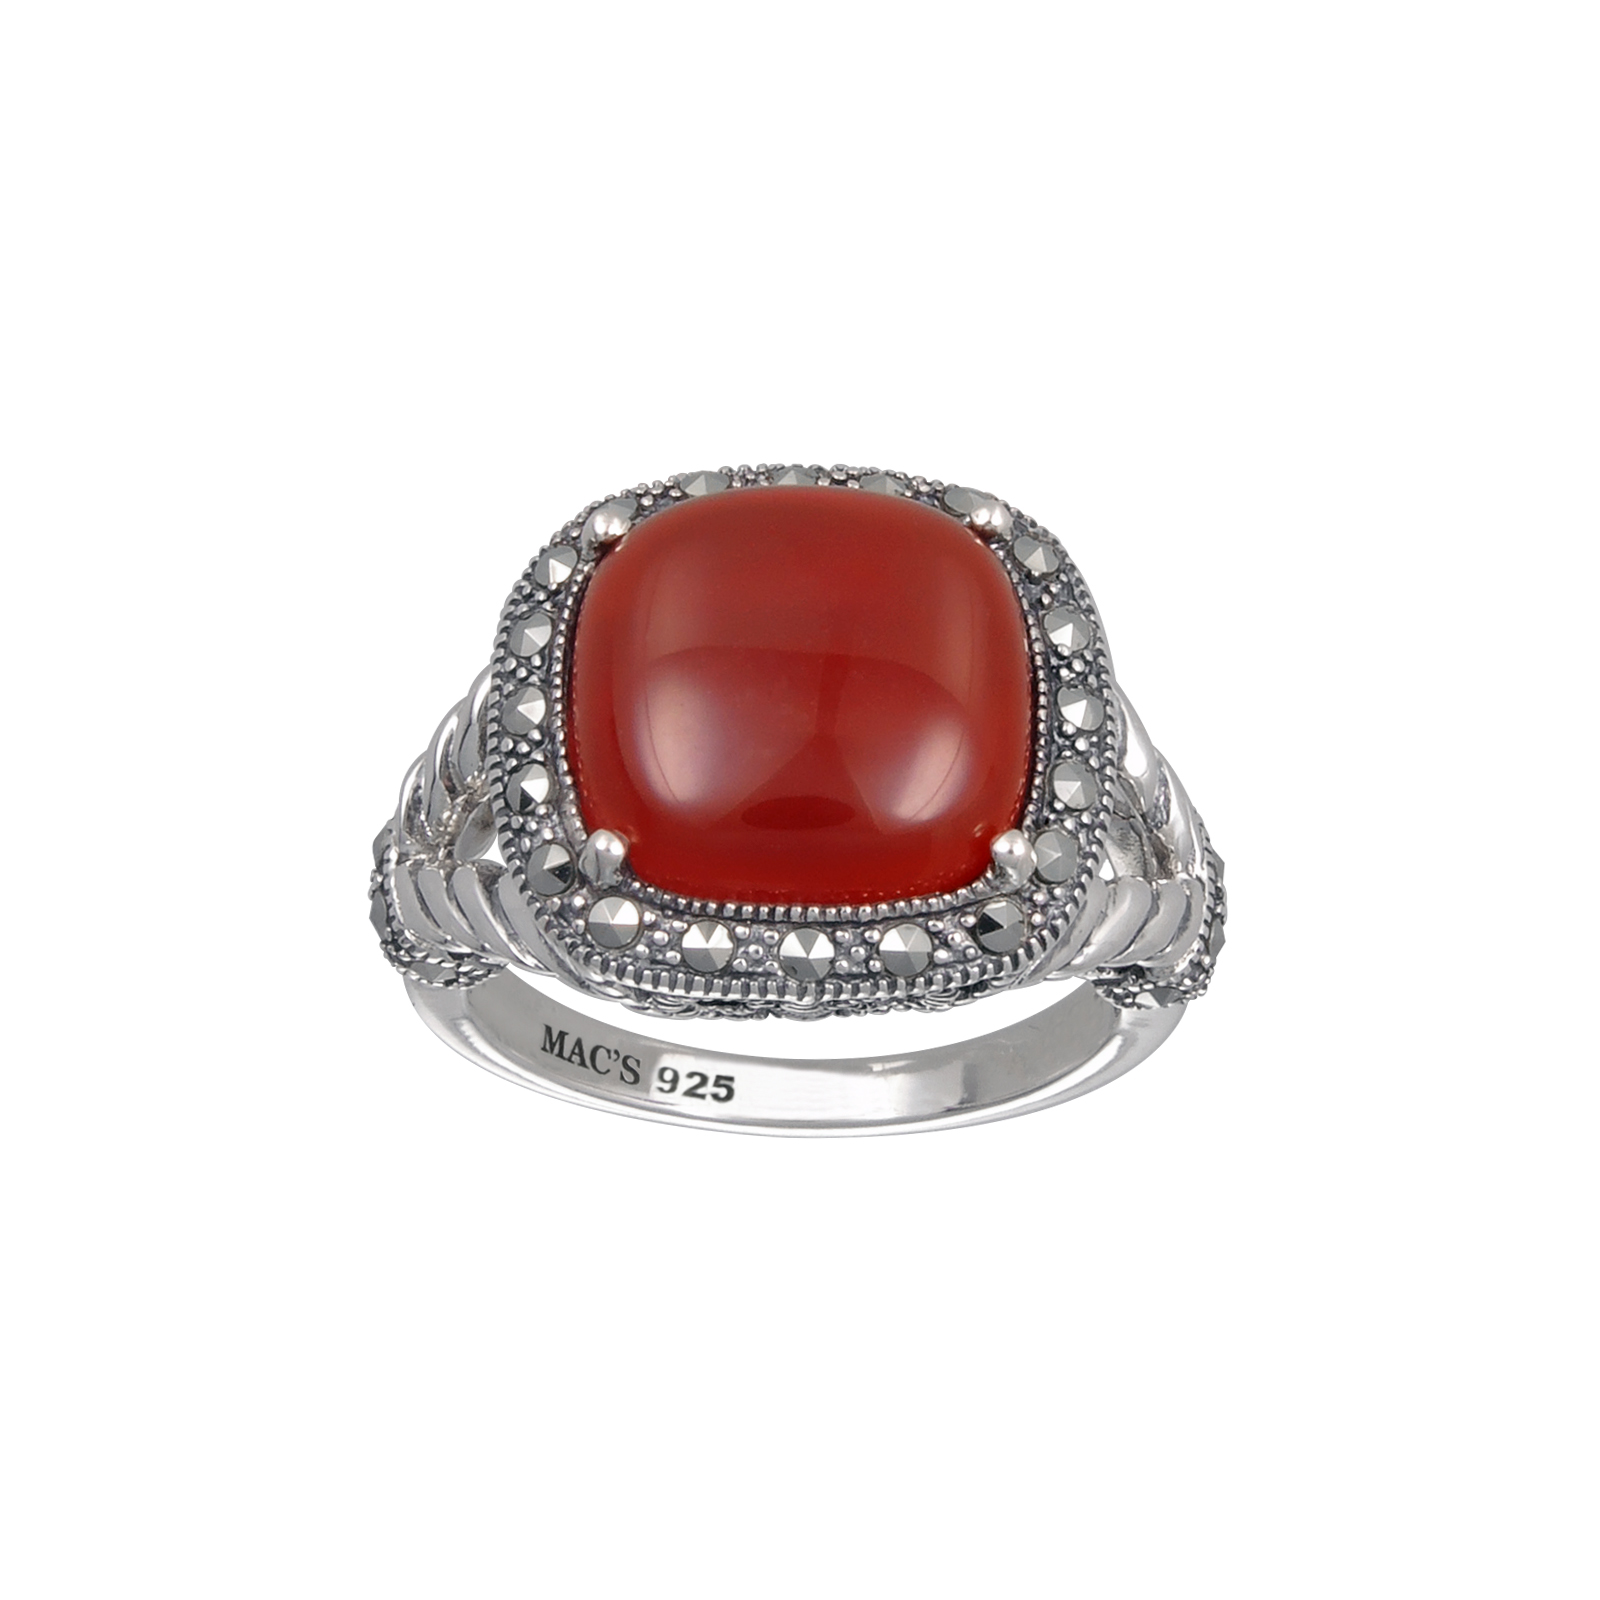 Mac's Cabochon Square Cut Red Agate & Marcasite Ring